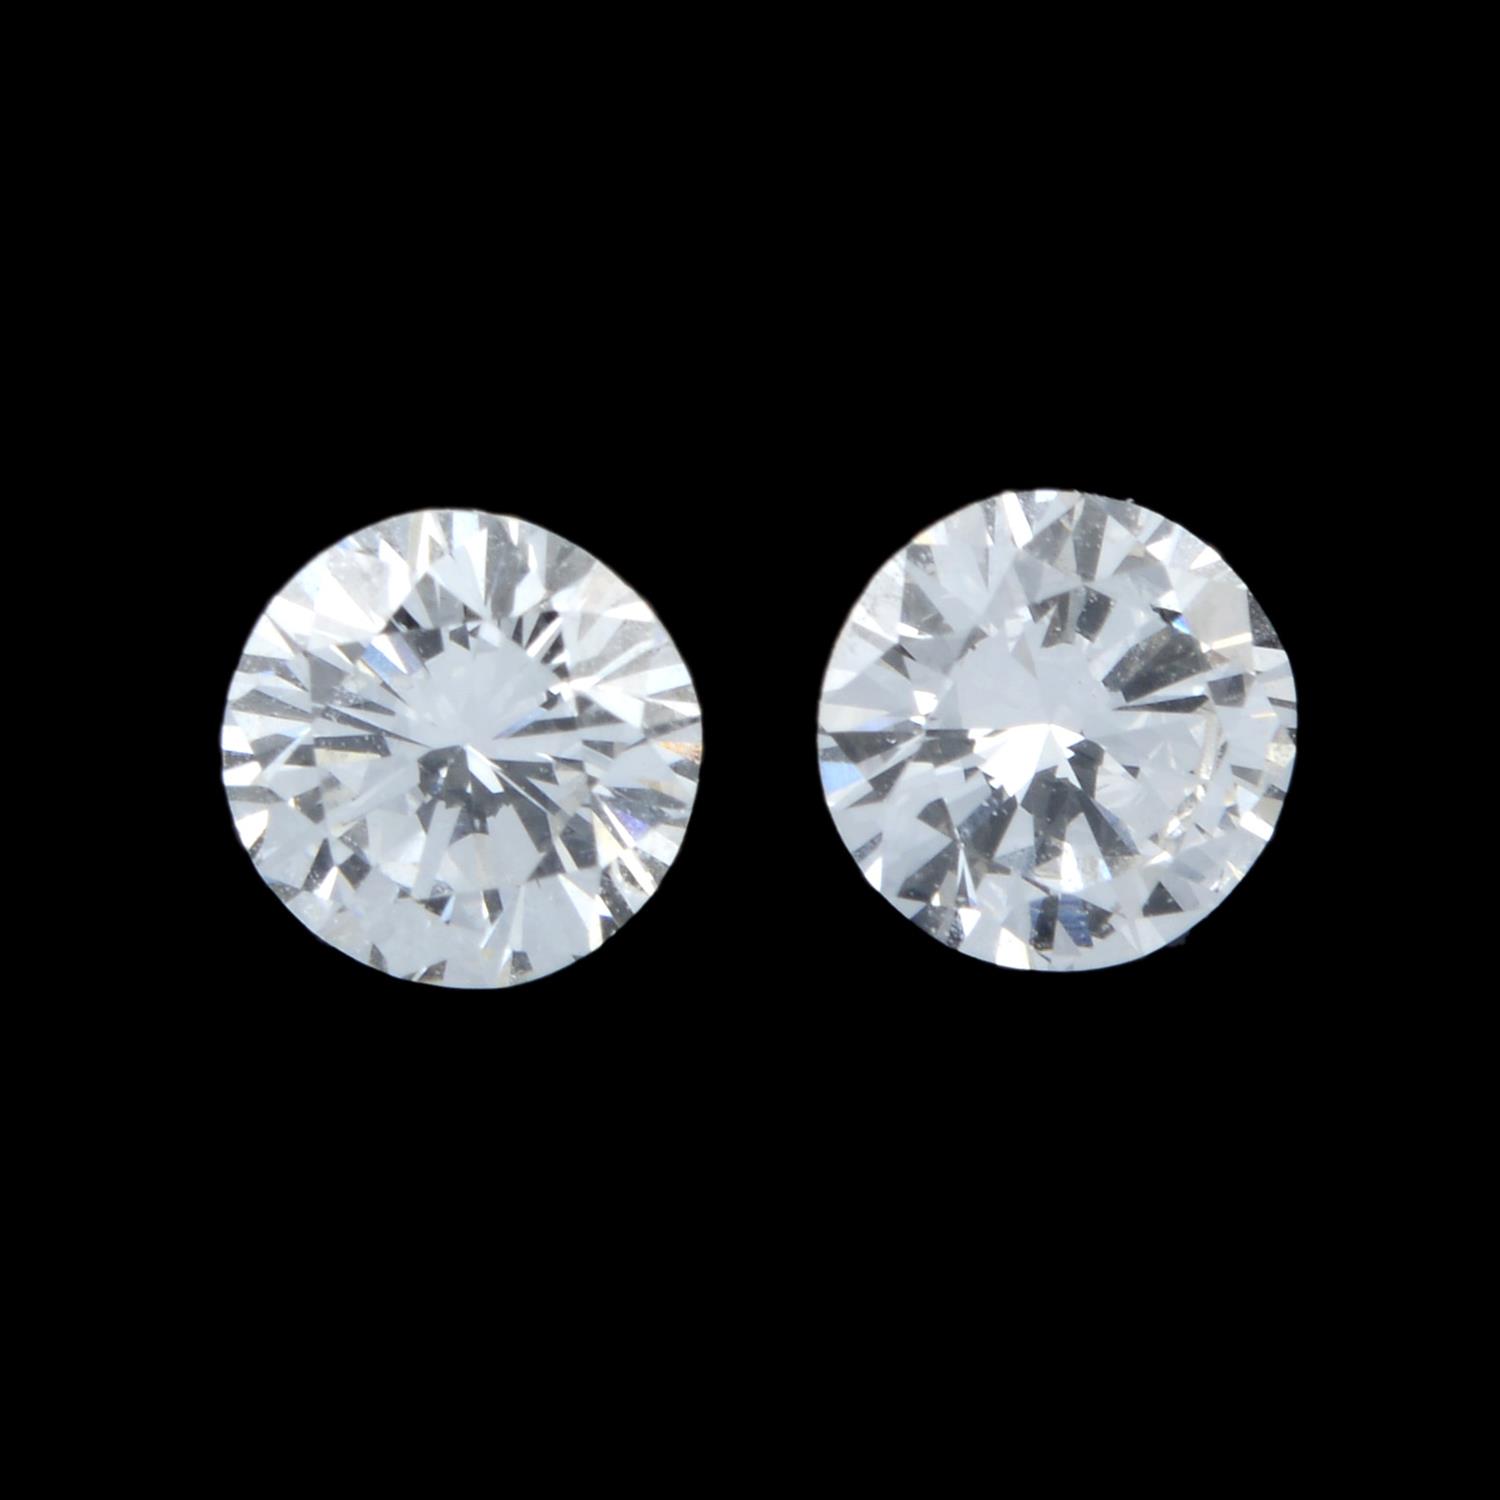 Pair of brilliant cut diamonds, weighing 0.55ct